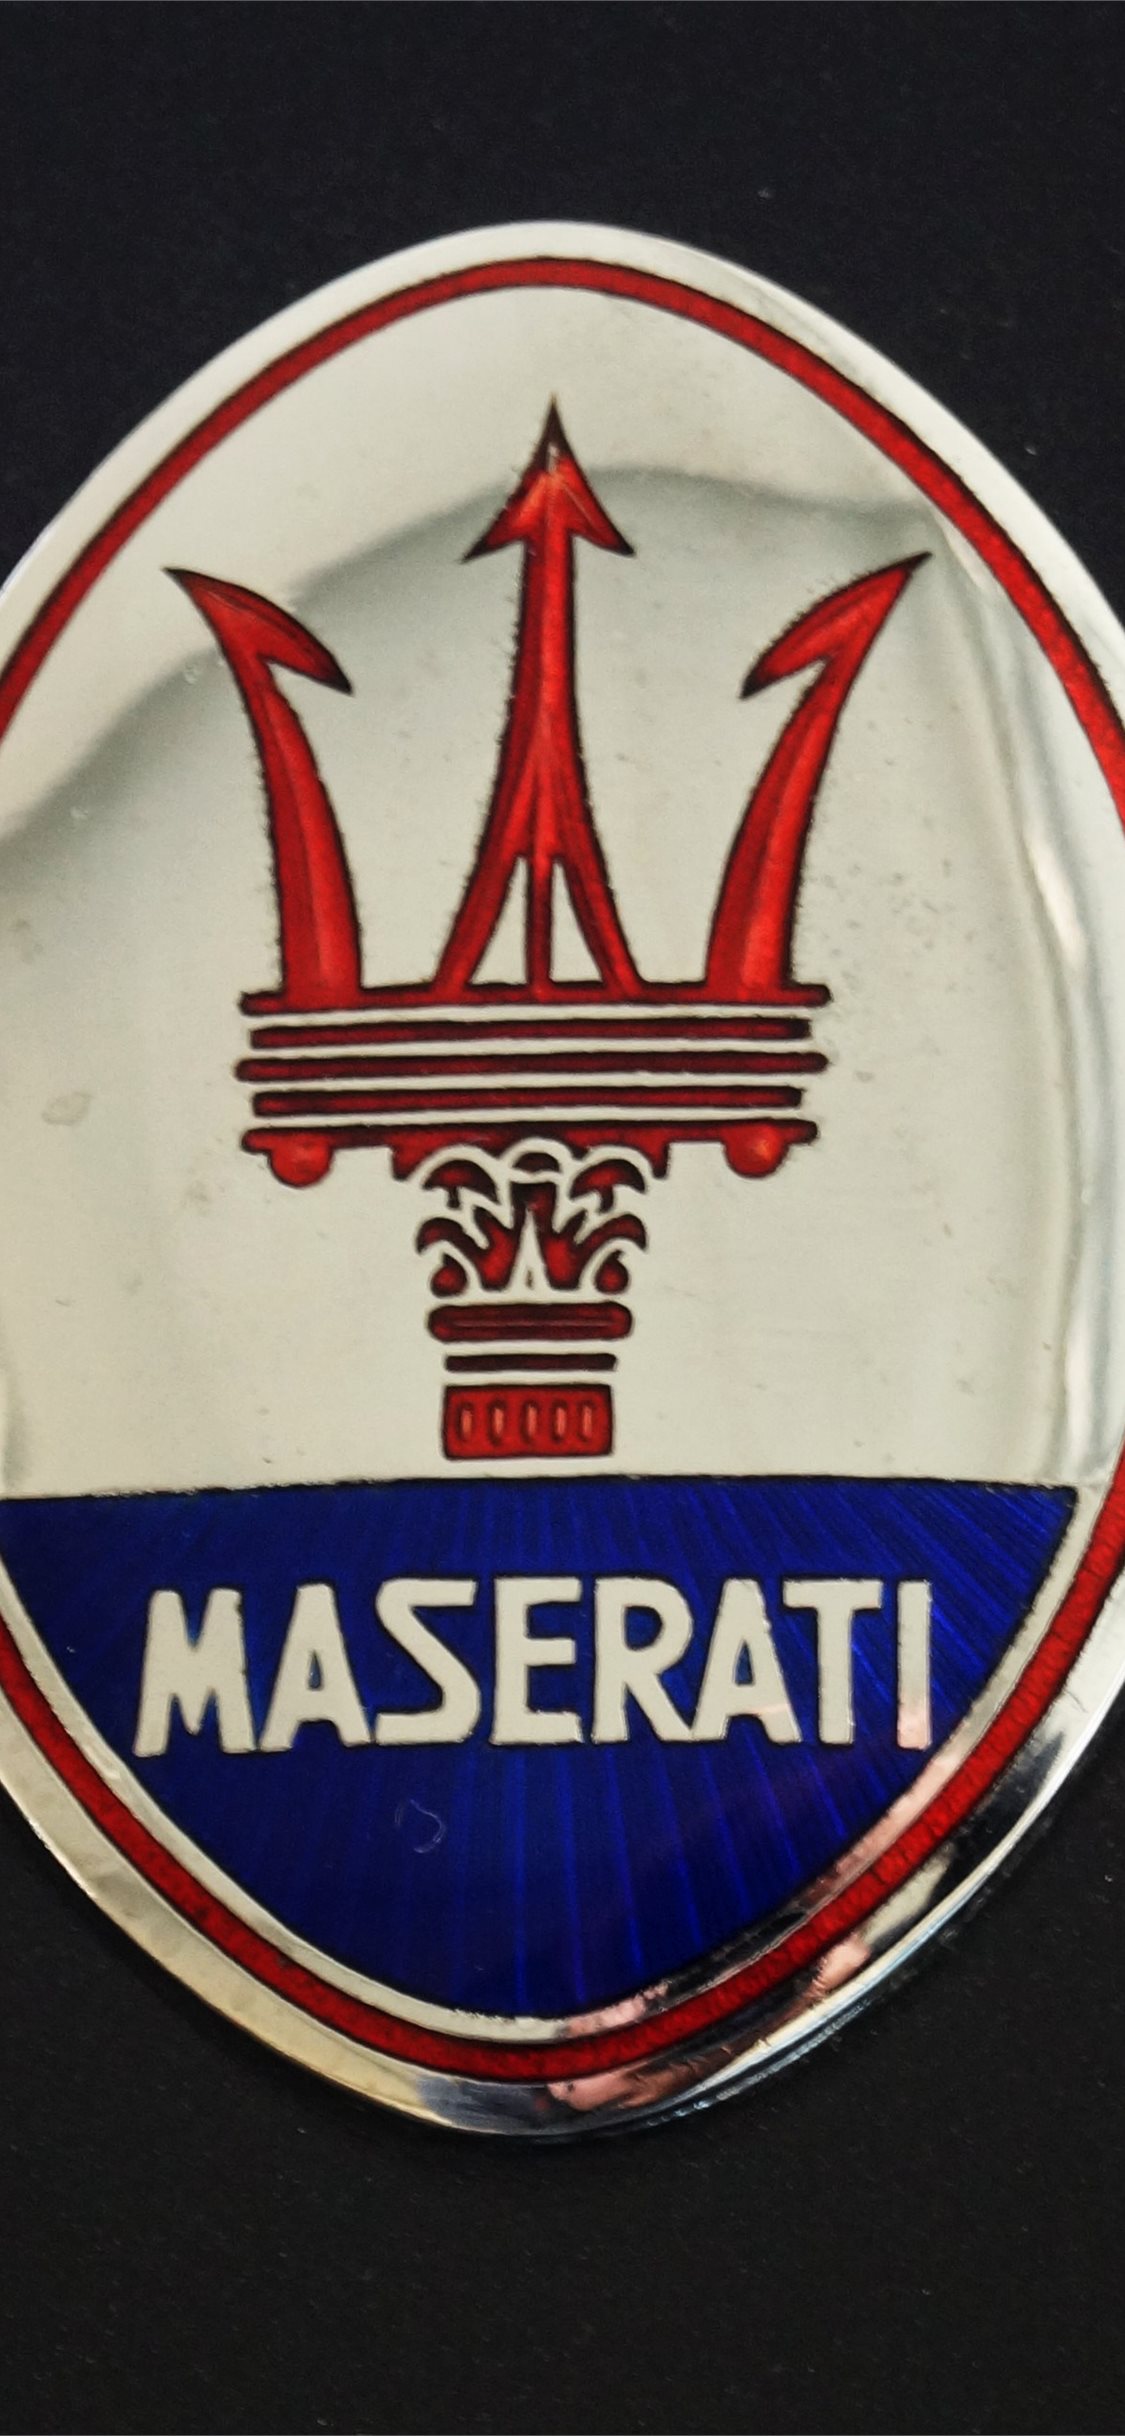 Maserati Symbol Wallpapers